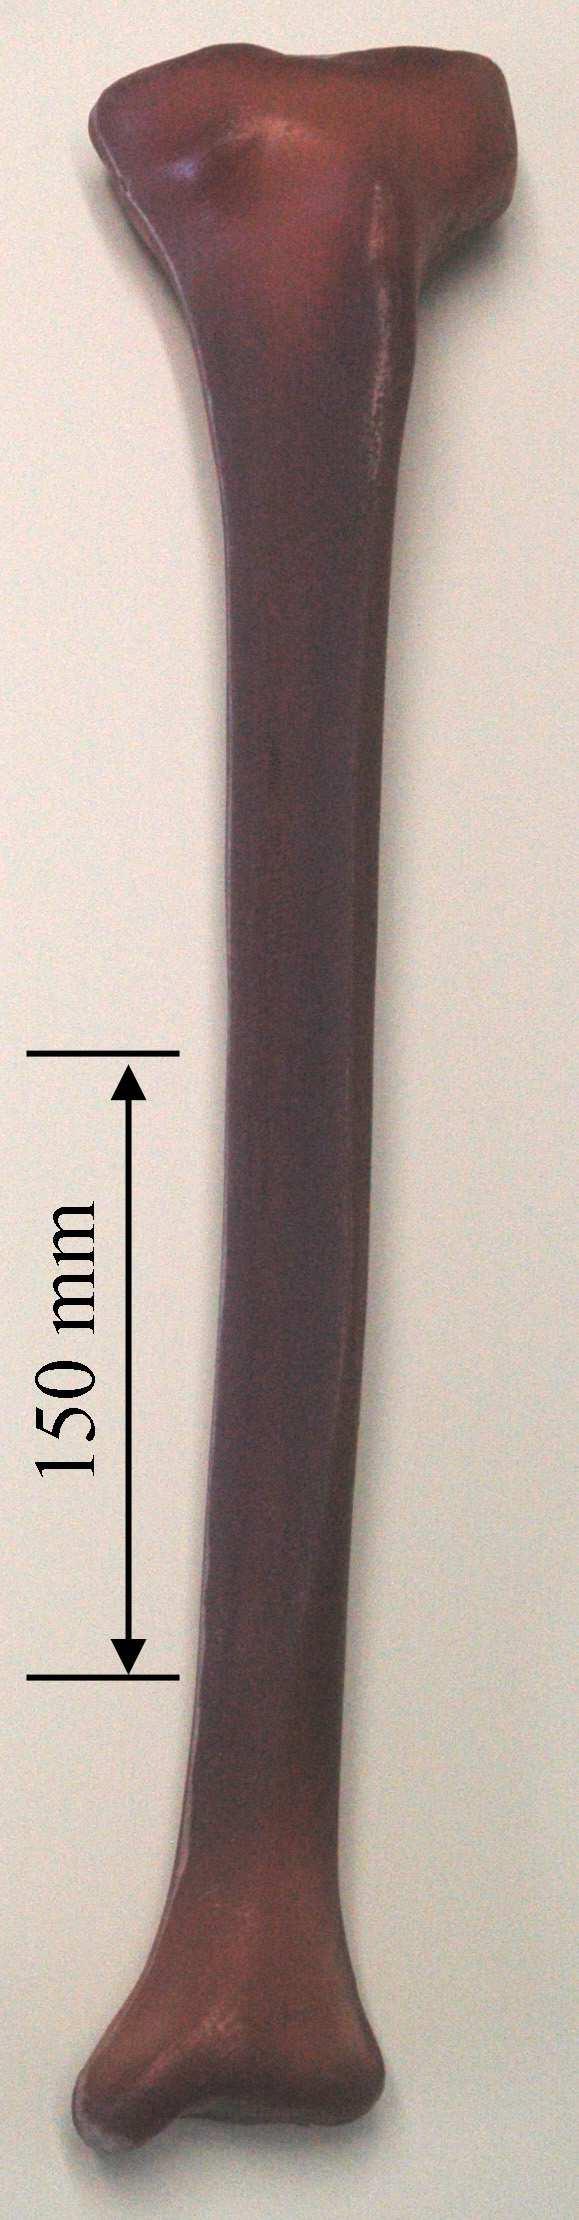 Proximal Bicortical screw holes 85 mm (a) (b) Distal Figure 1. Experimental model.